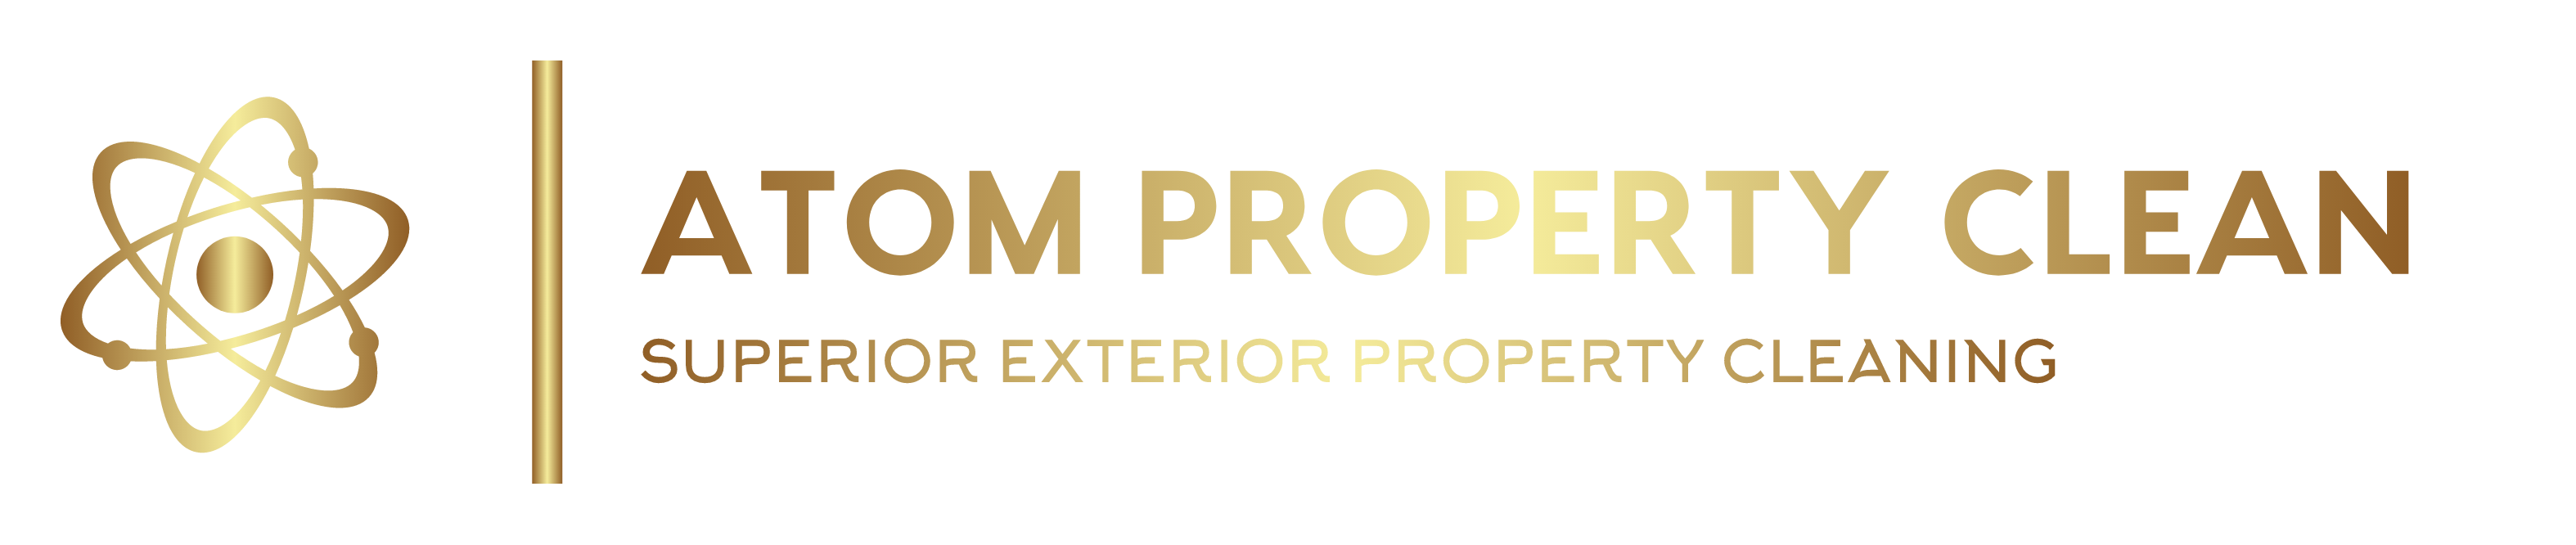 Atom Property Clean Logo